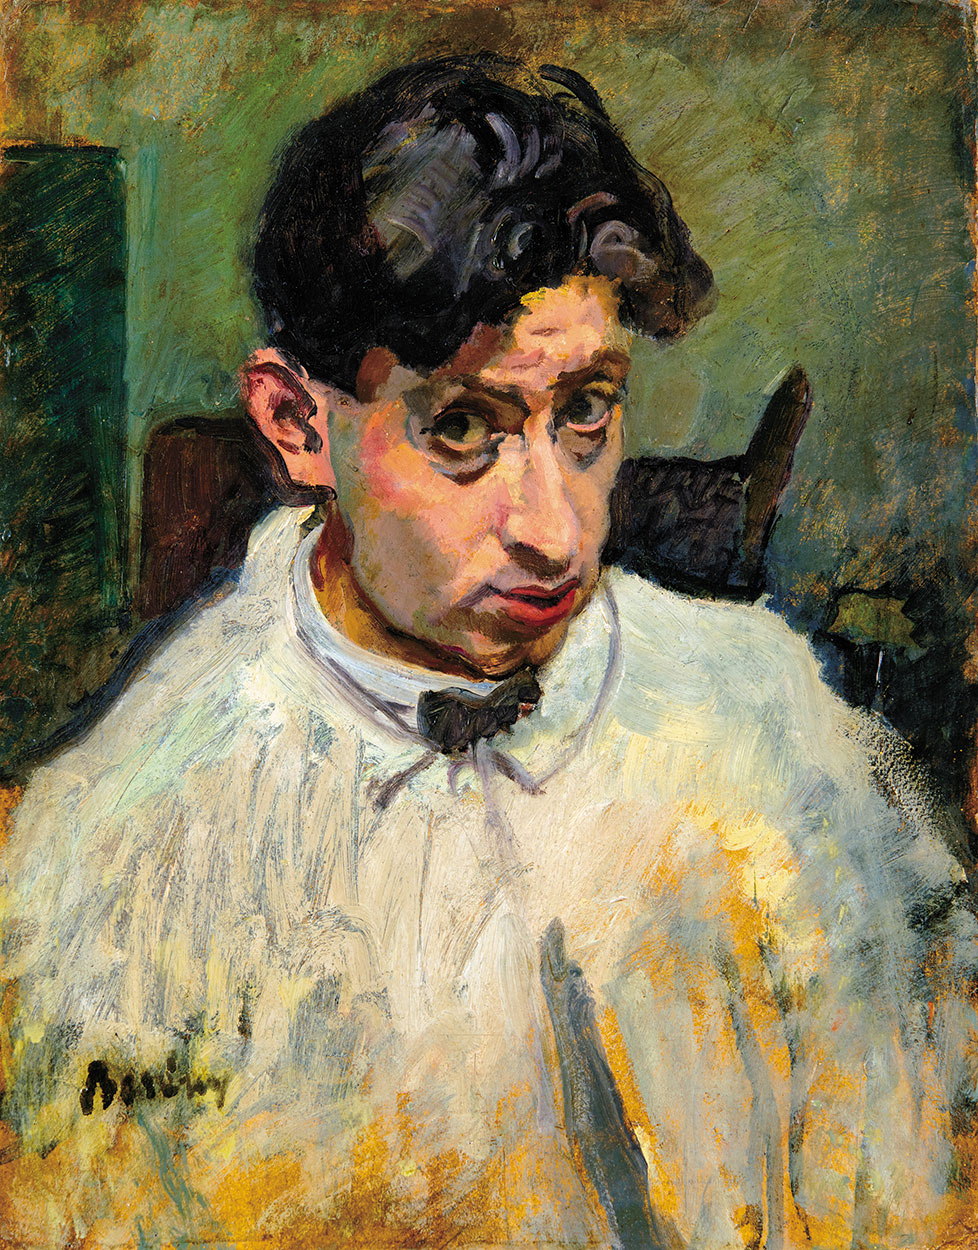 Berény Róbert (1887-1953) Self-portrait studium, presumably around 1906